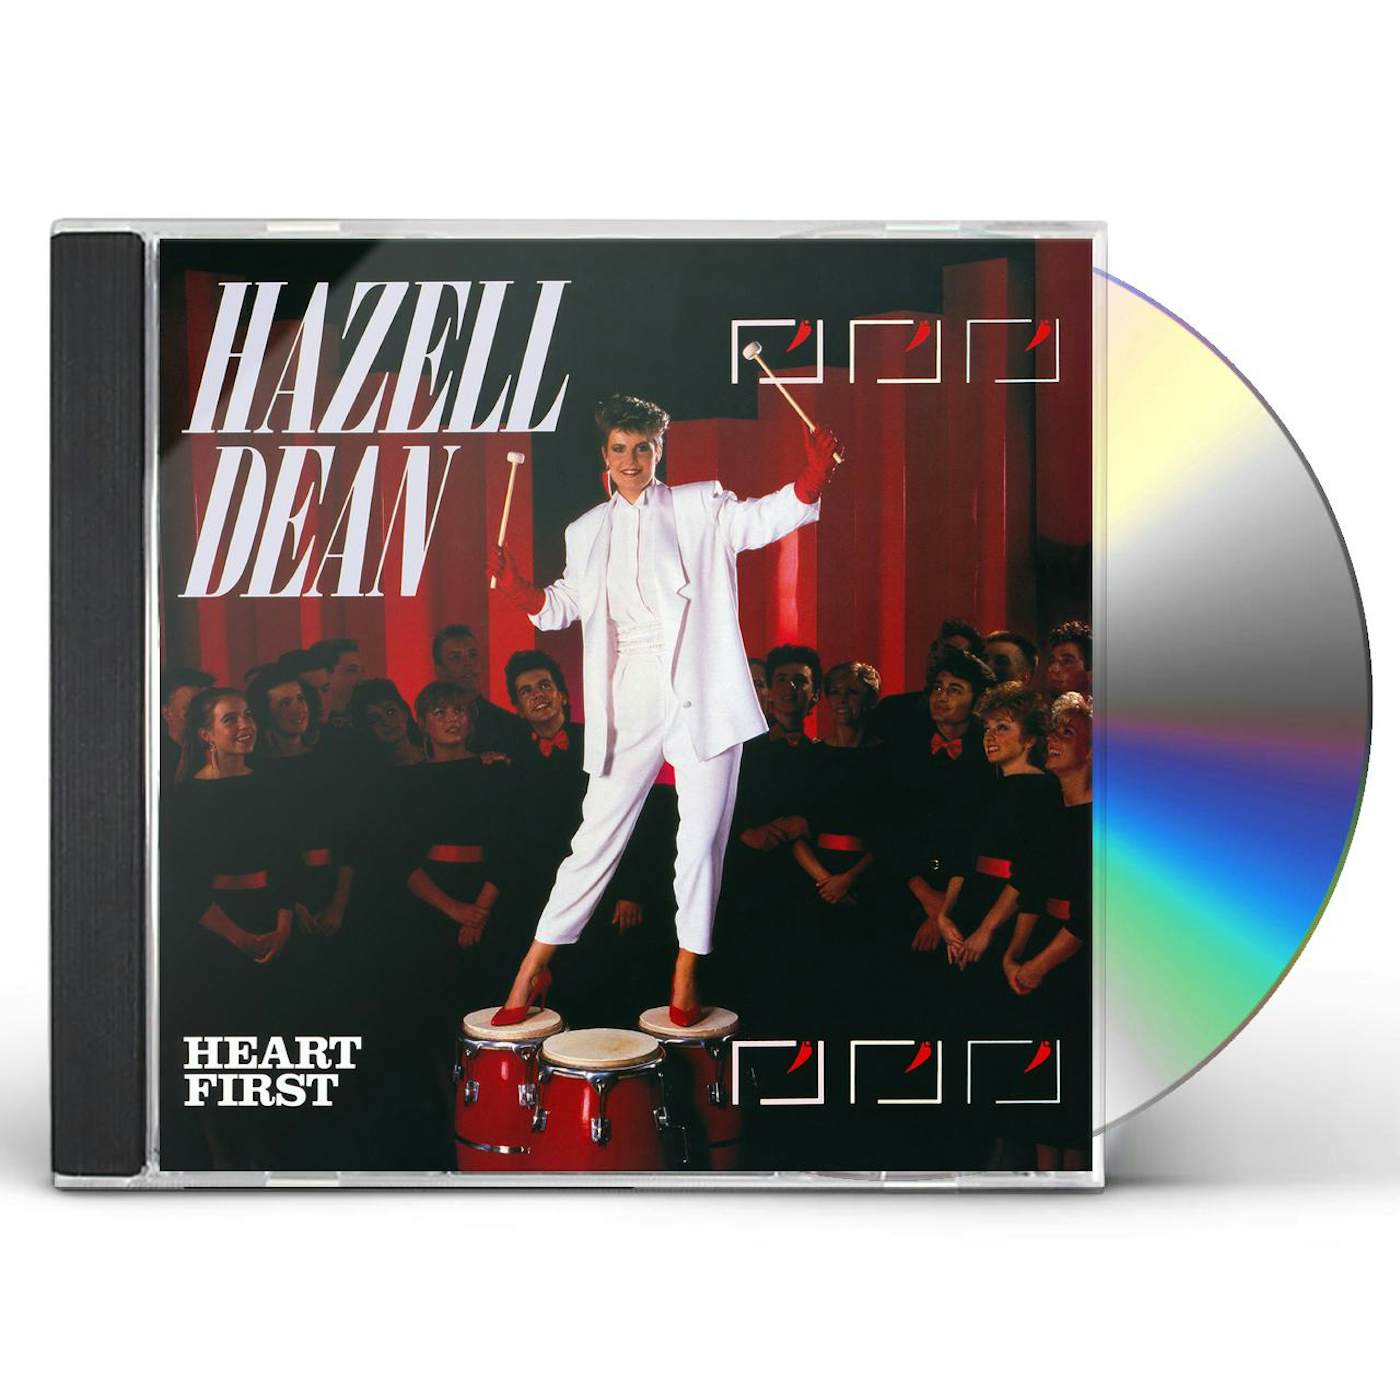 Hazell Dean Heart First: Deluxe Edition CD